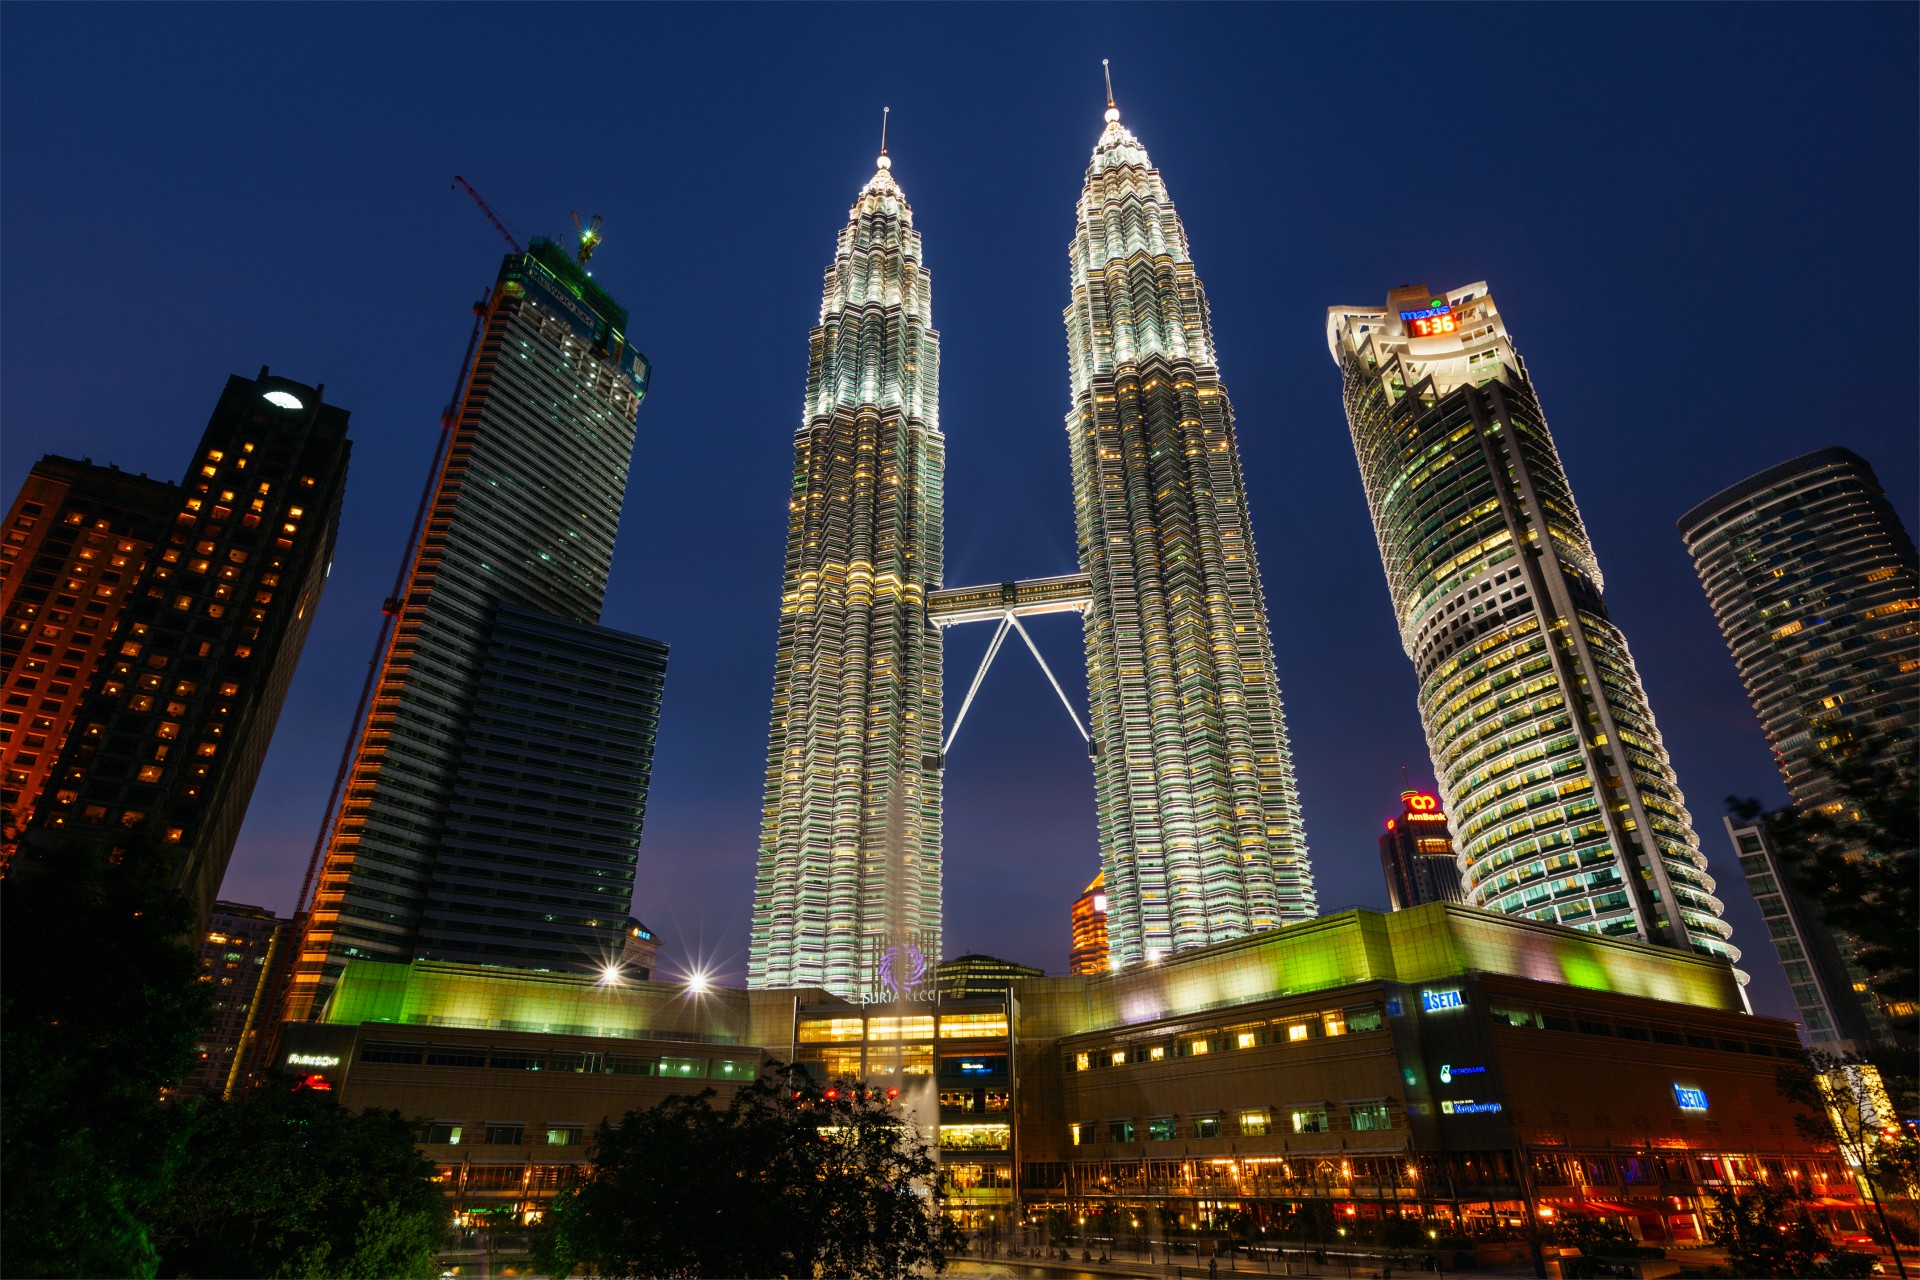 The Petronas Towers of Kuala Lumpur - We Build Value